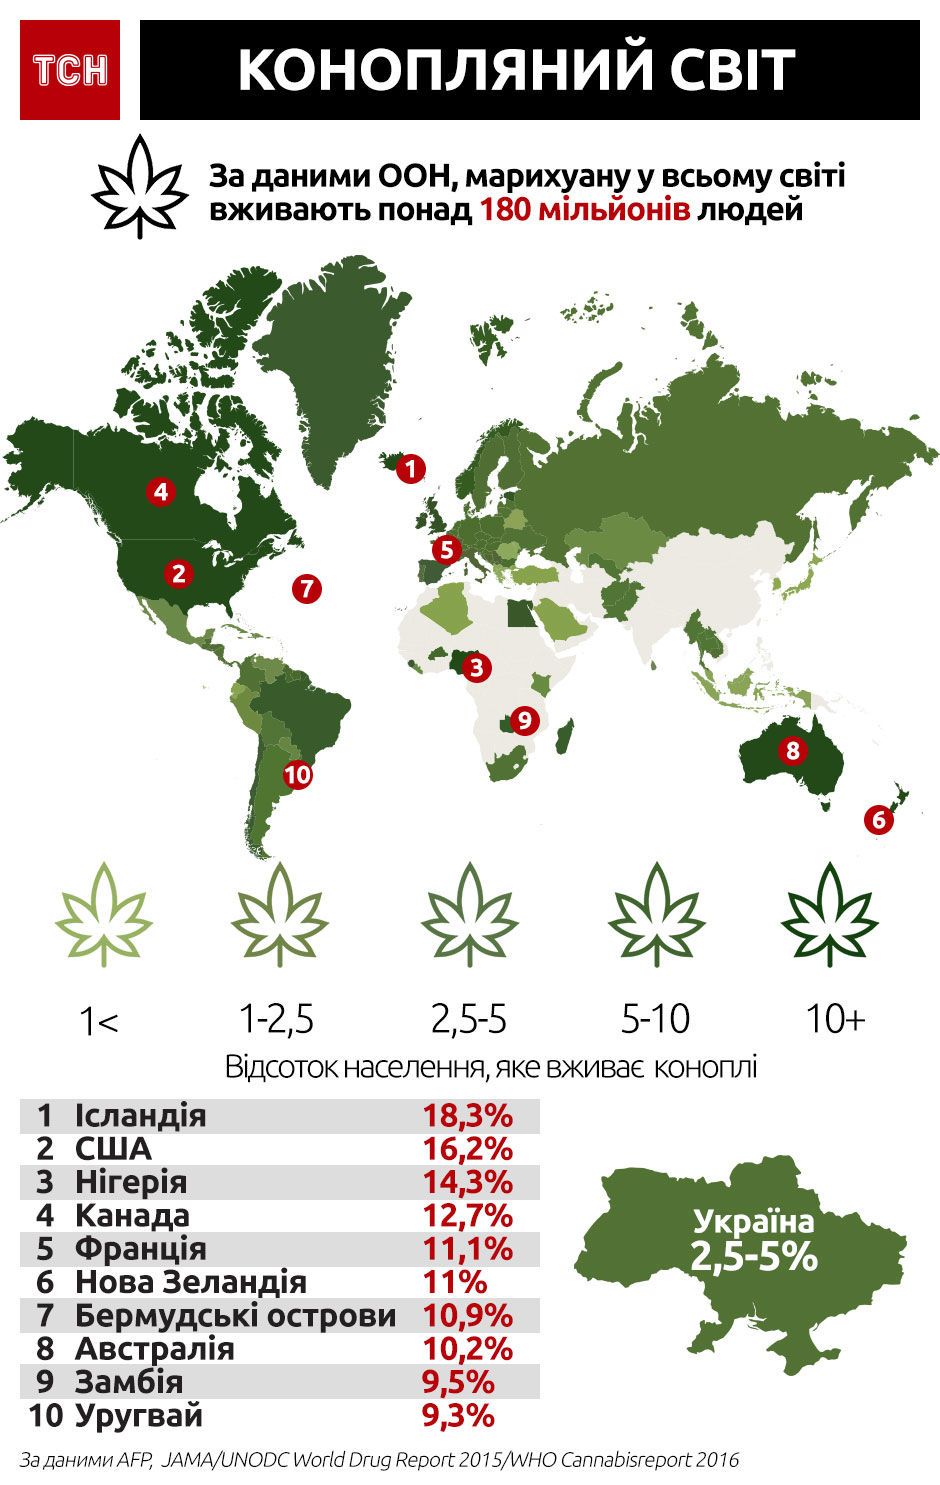 каких странах разрешено курить марихуану